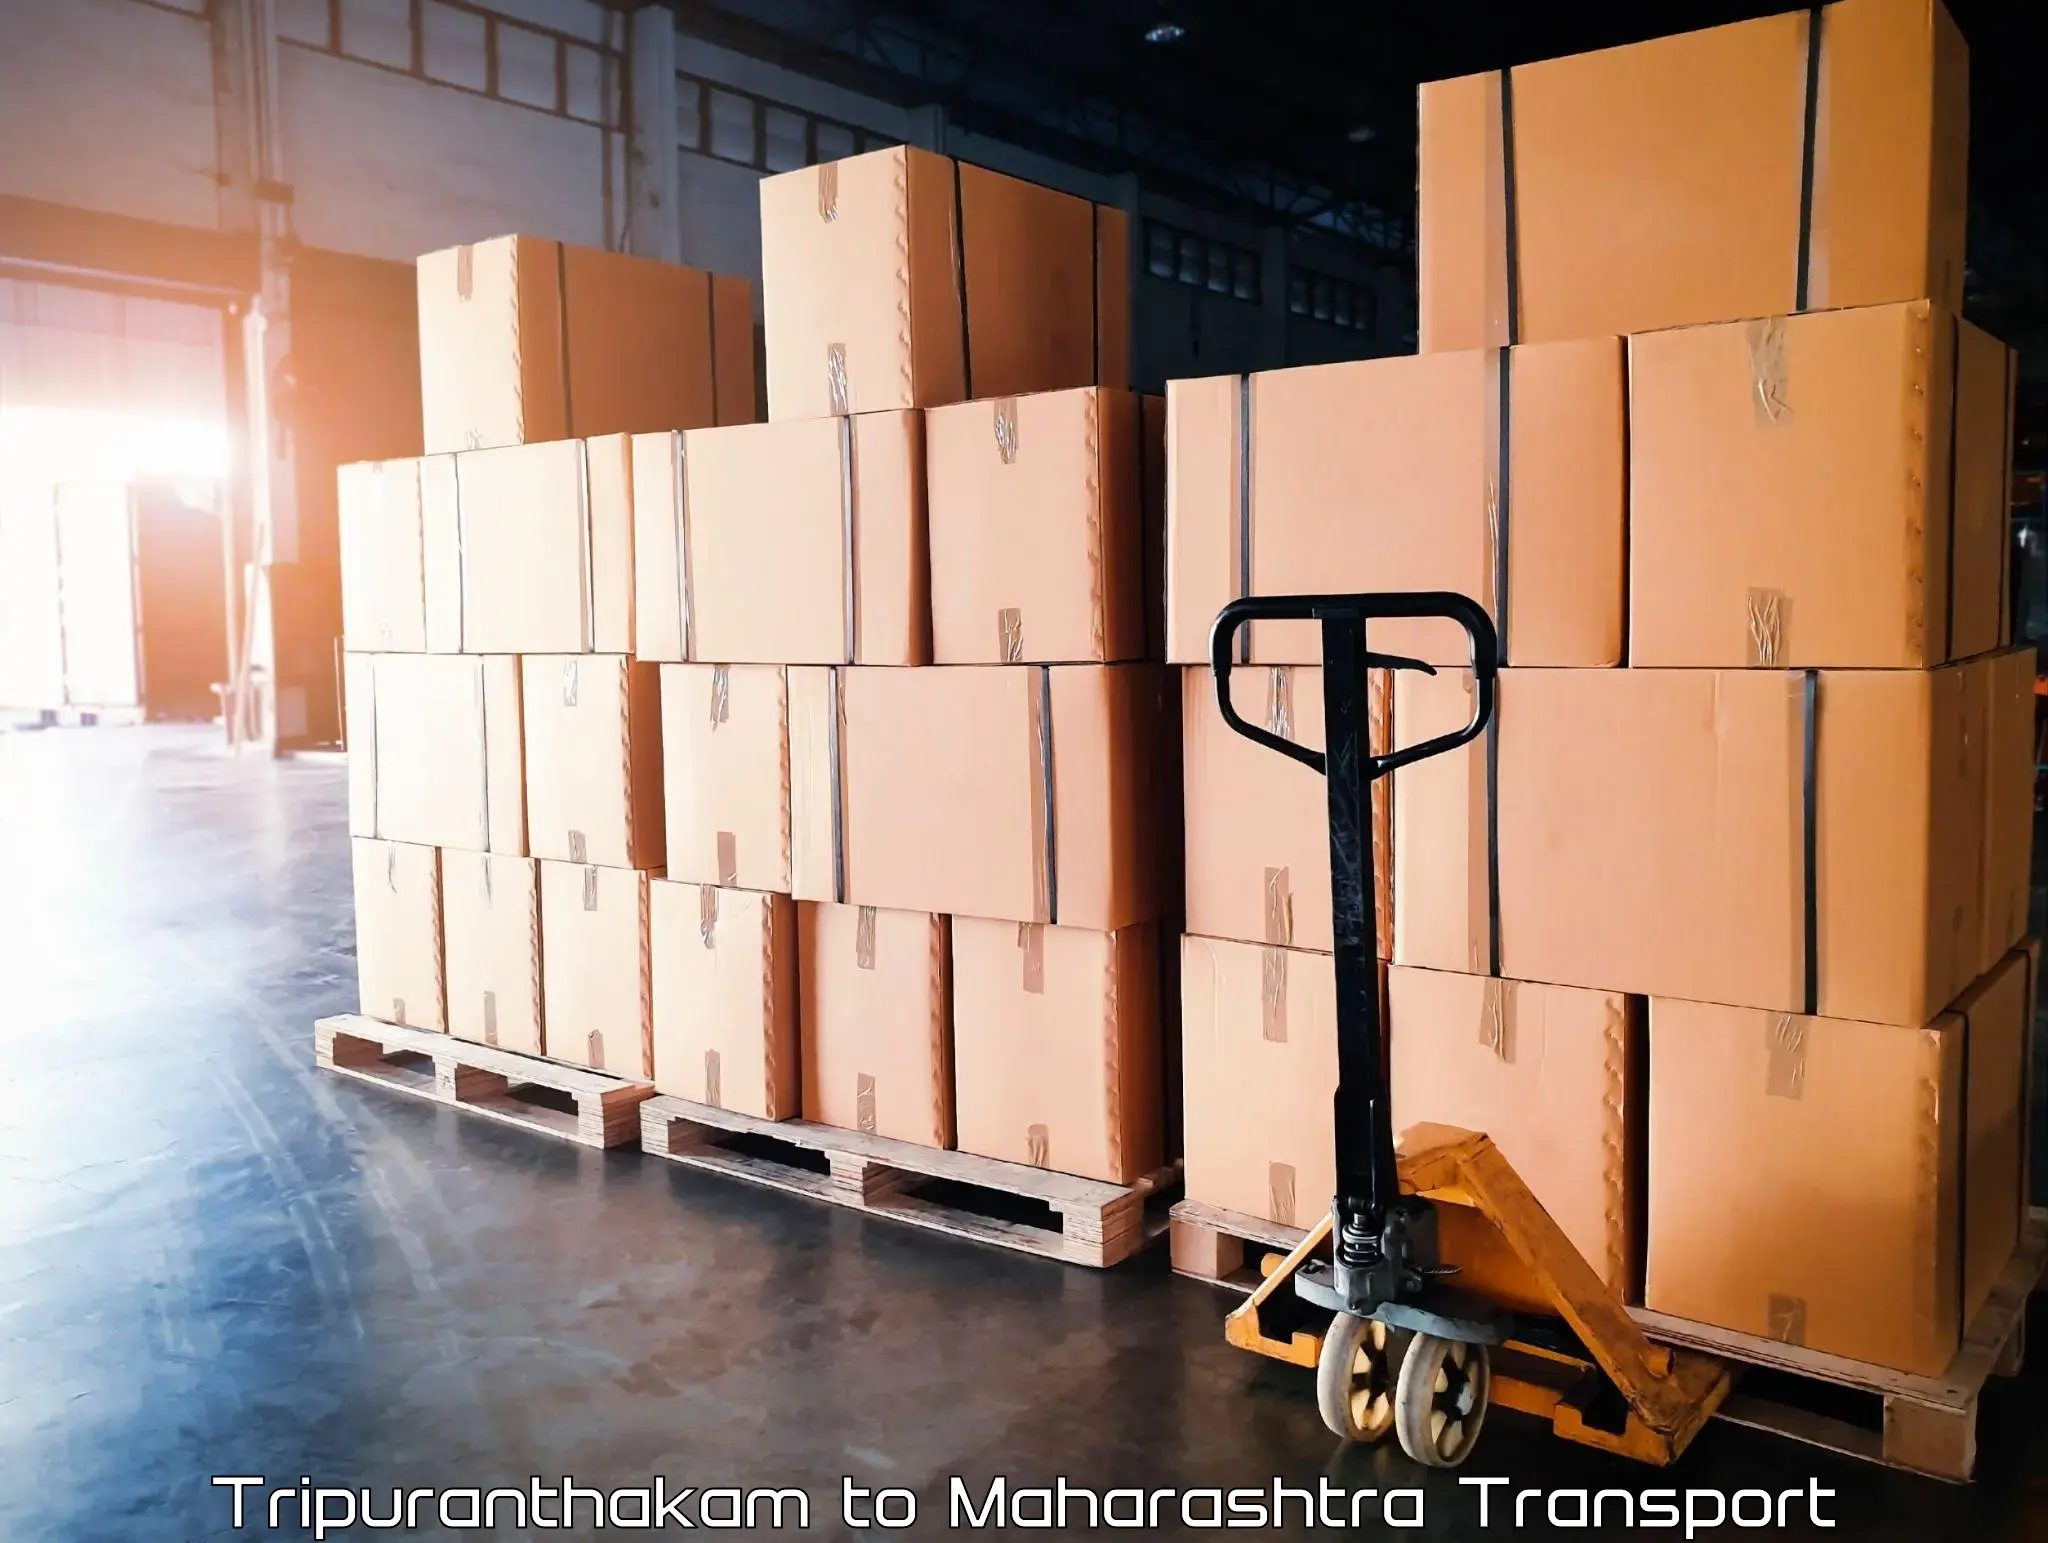 Daily parcel service transport Tripuranthakam to Mumbai Port